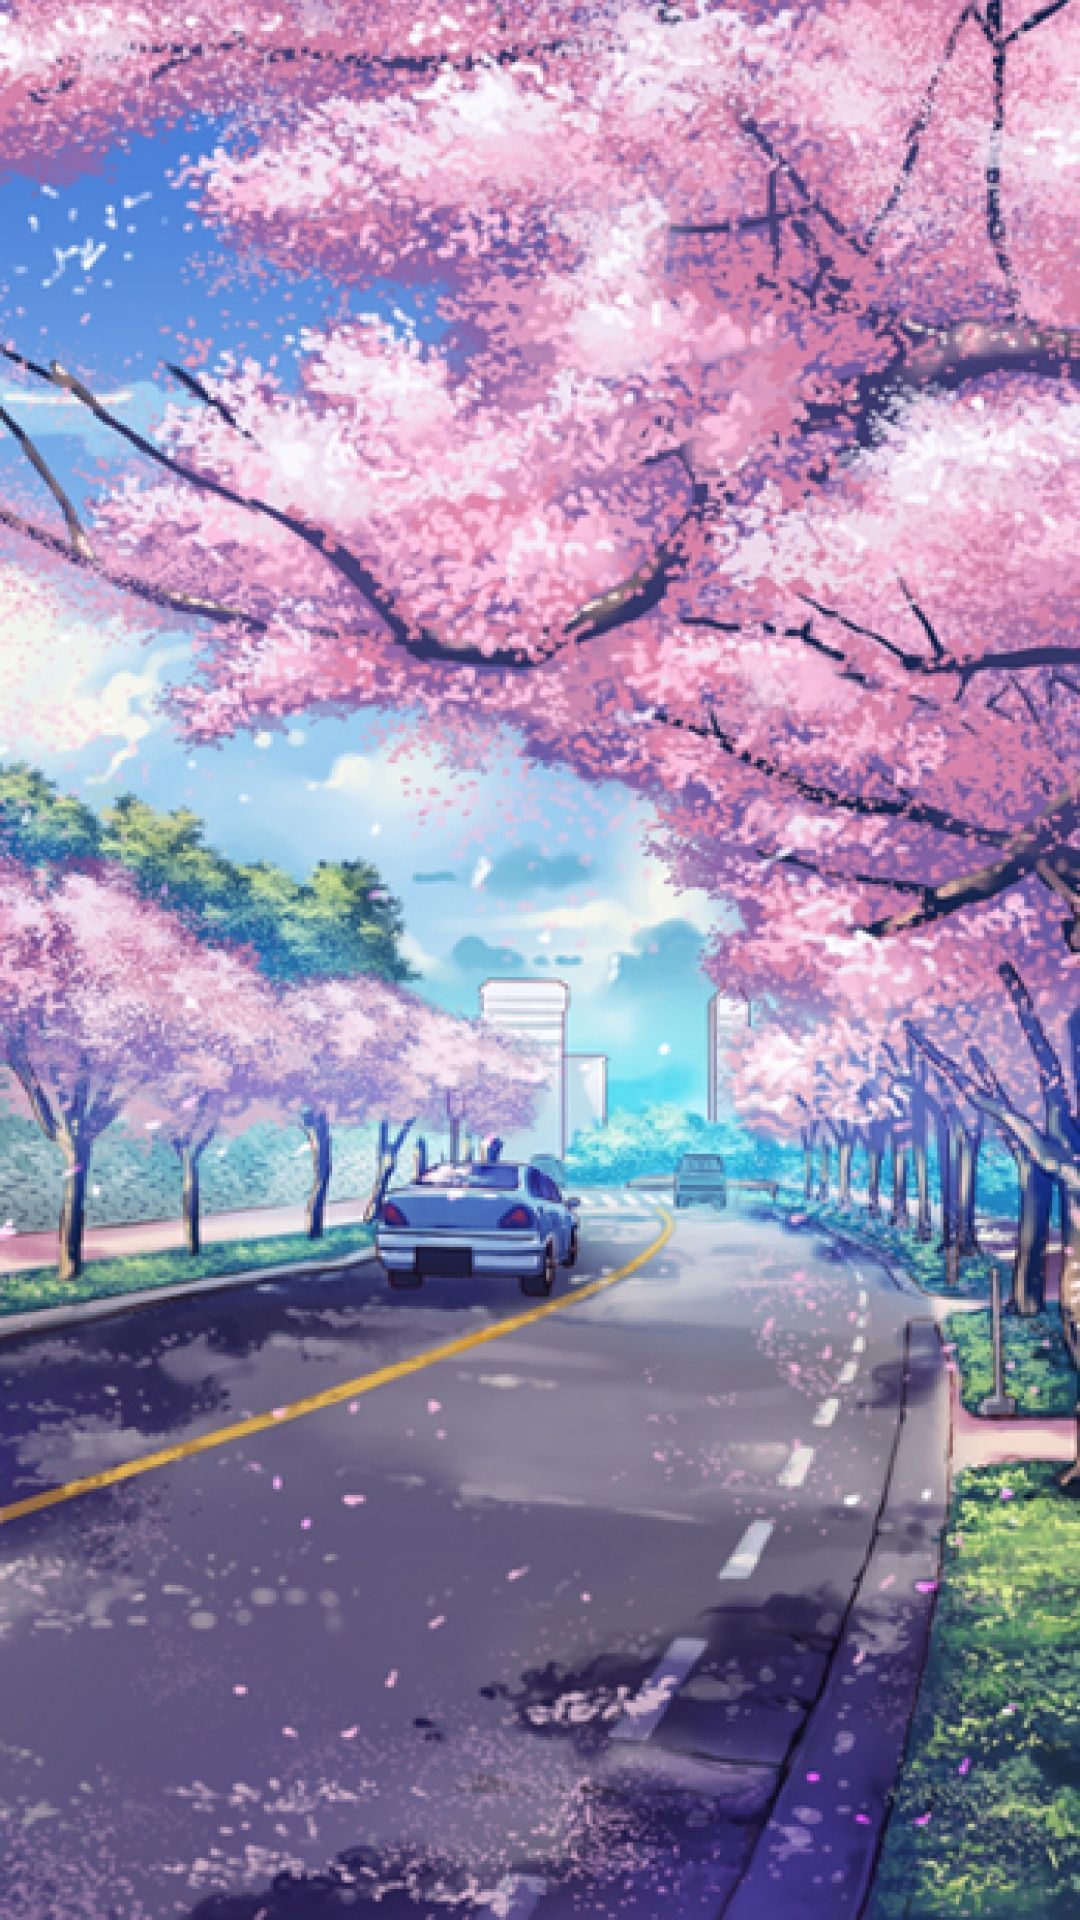 Japanese Anime, iPhone, Desktop HD Background / Wallpaper (1080p, 4k) (. Anime background wallpaper, Anime scenery wallpaper, iPhone wallpaper japan